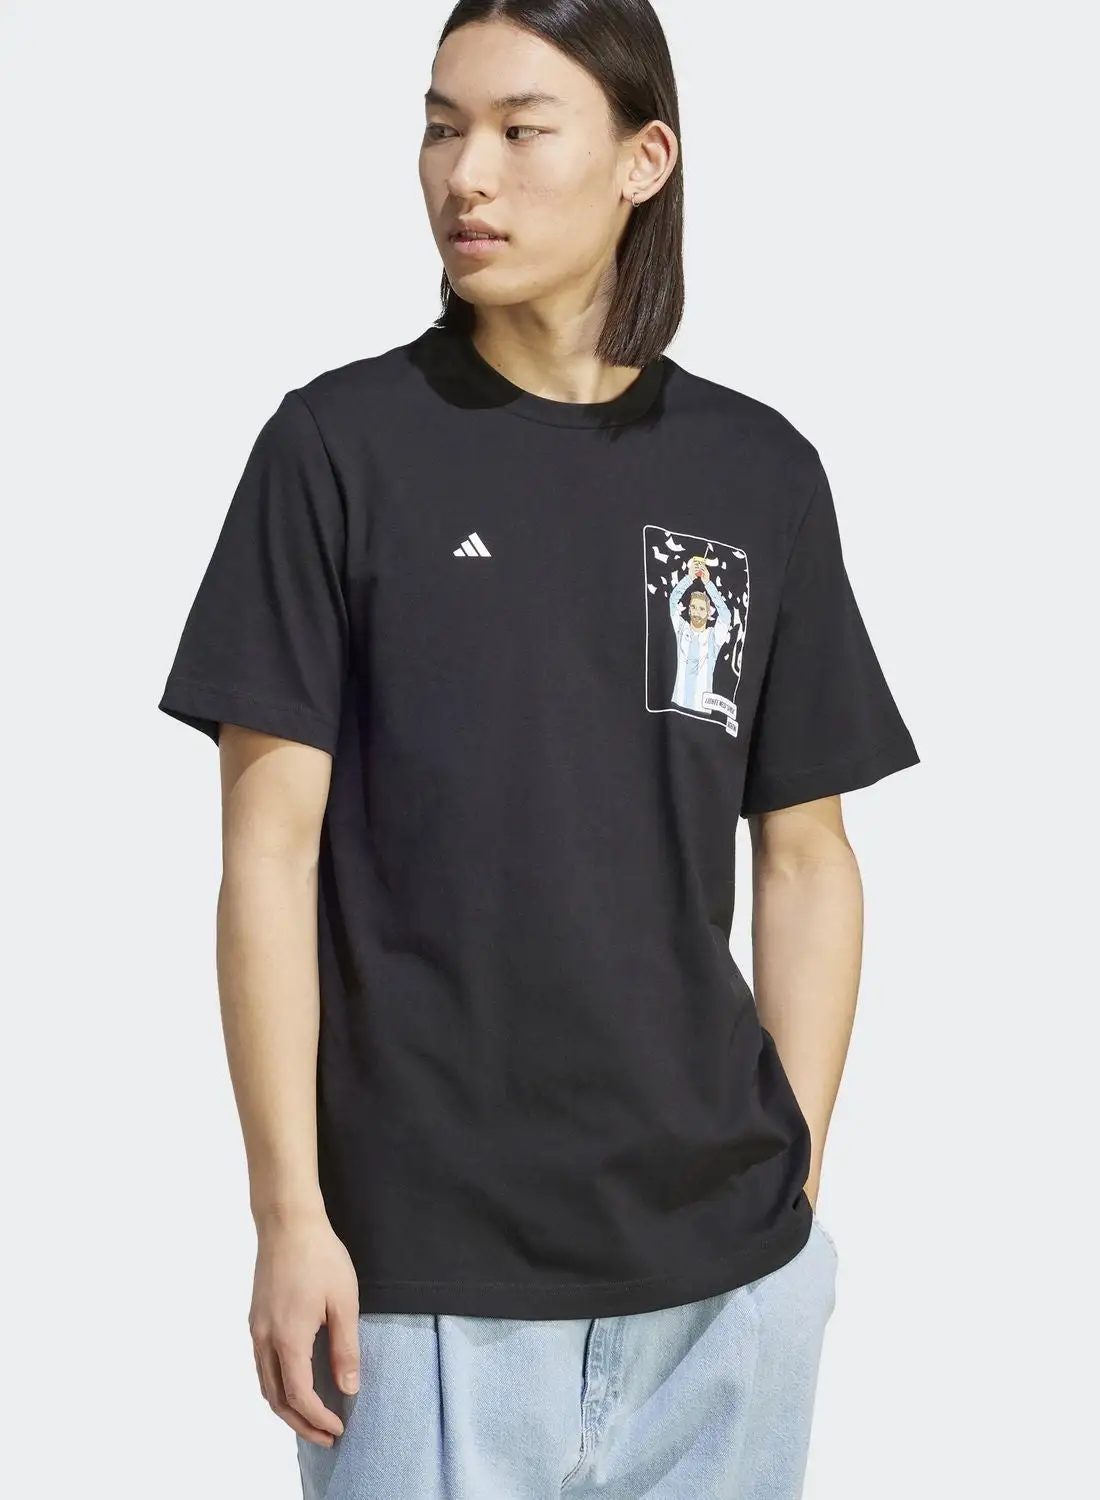 Adidas Messi Graphic T-Shirt